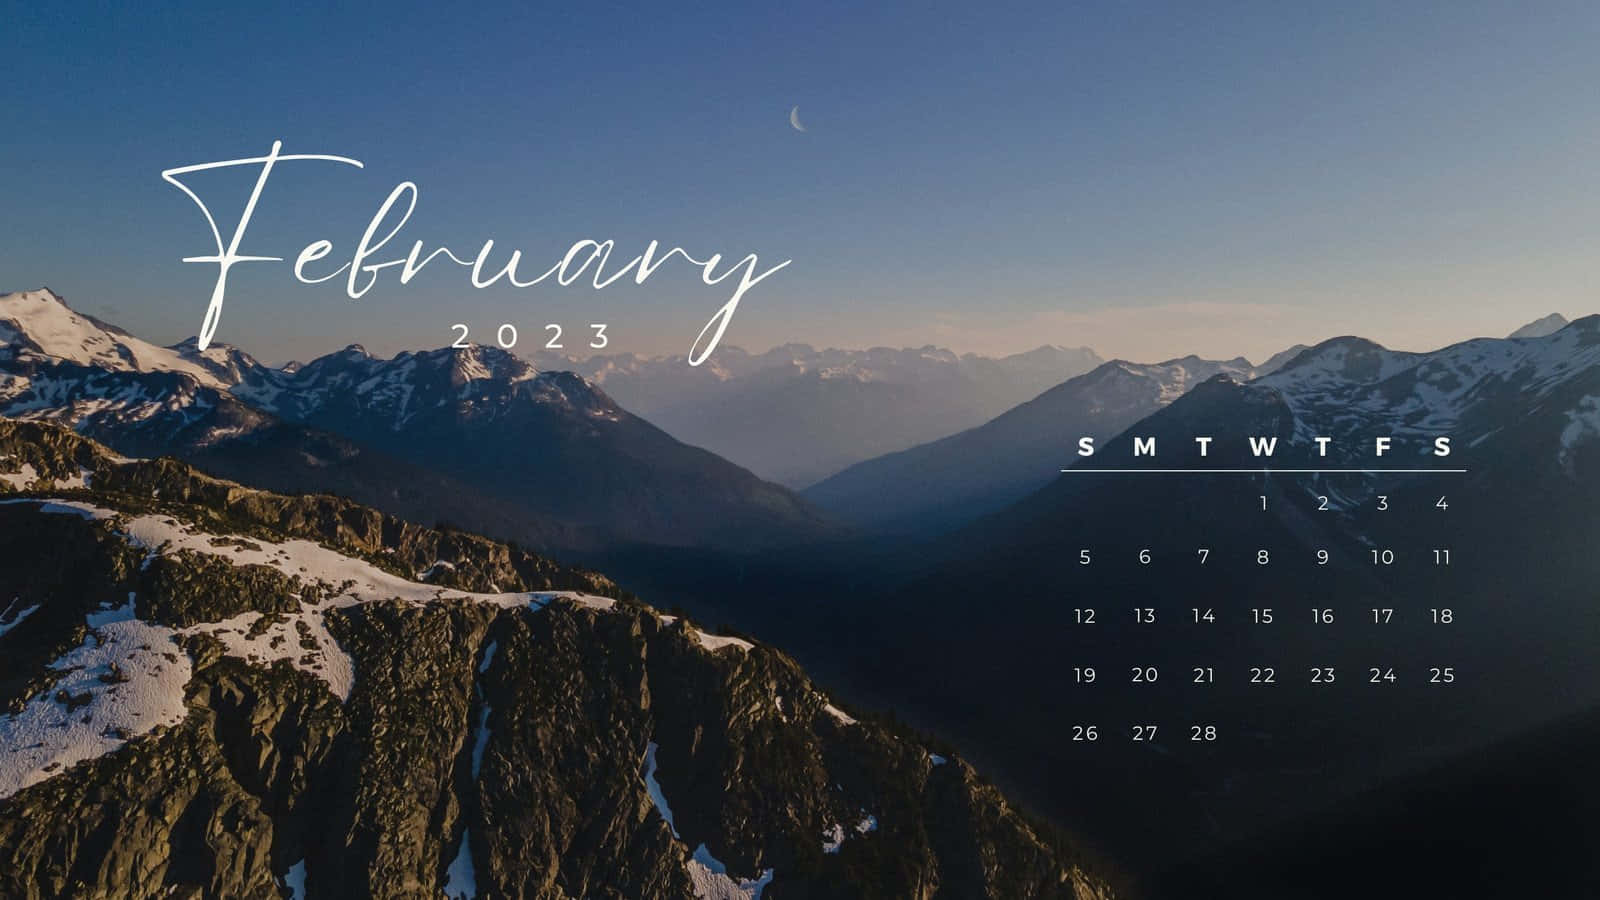 Snowy Mountain Tops 2023 February Calendar Wallpaper